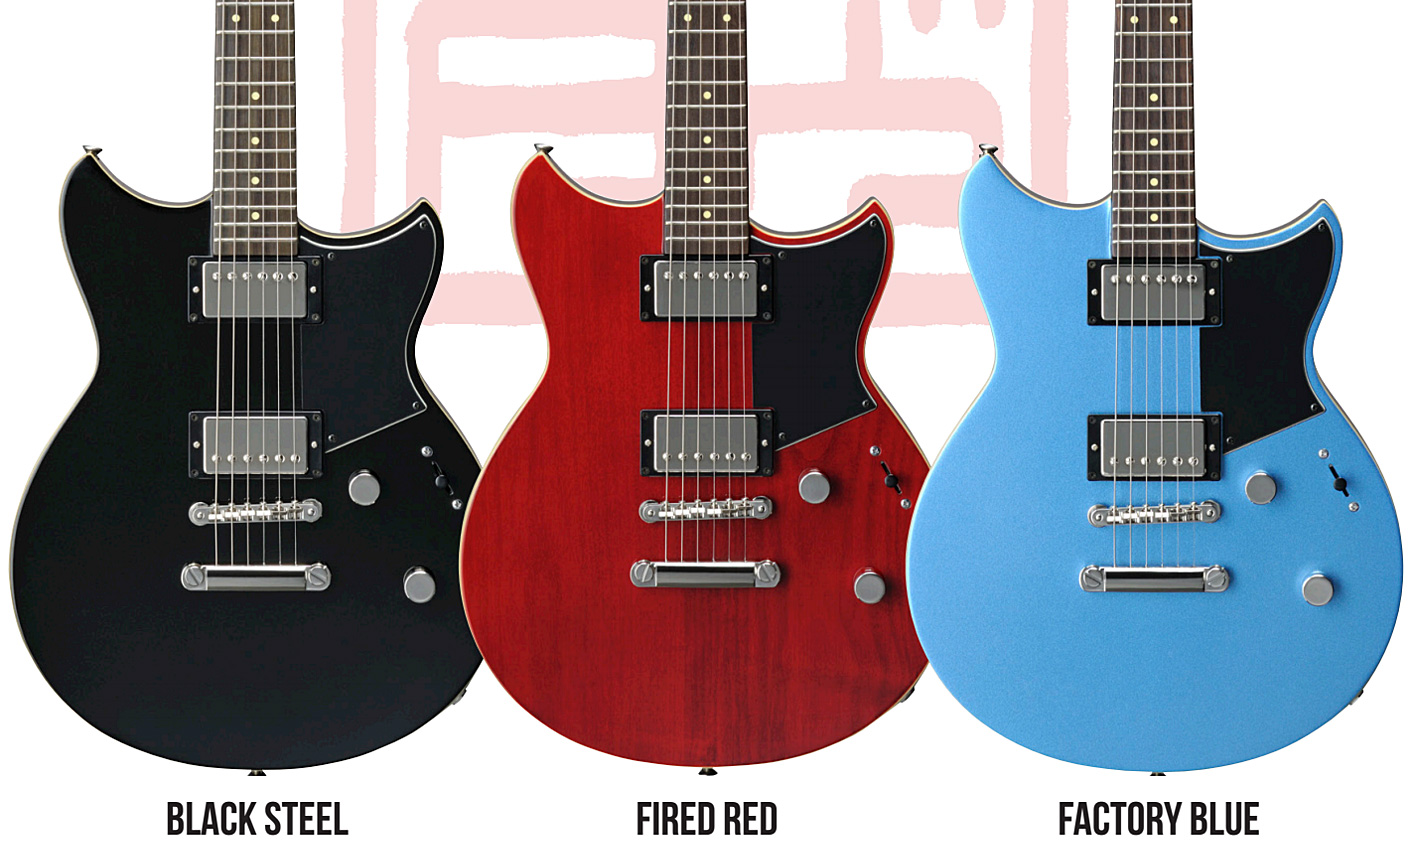 Yamaha Revstar Rs420 - Fired Red - Guitarra eléctrica de doble corte. - Variation 2